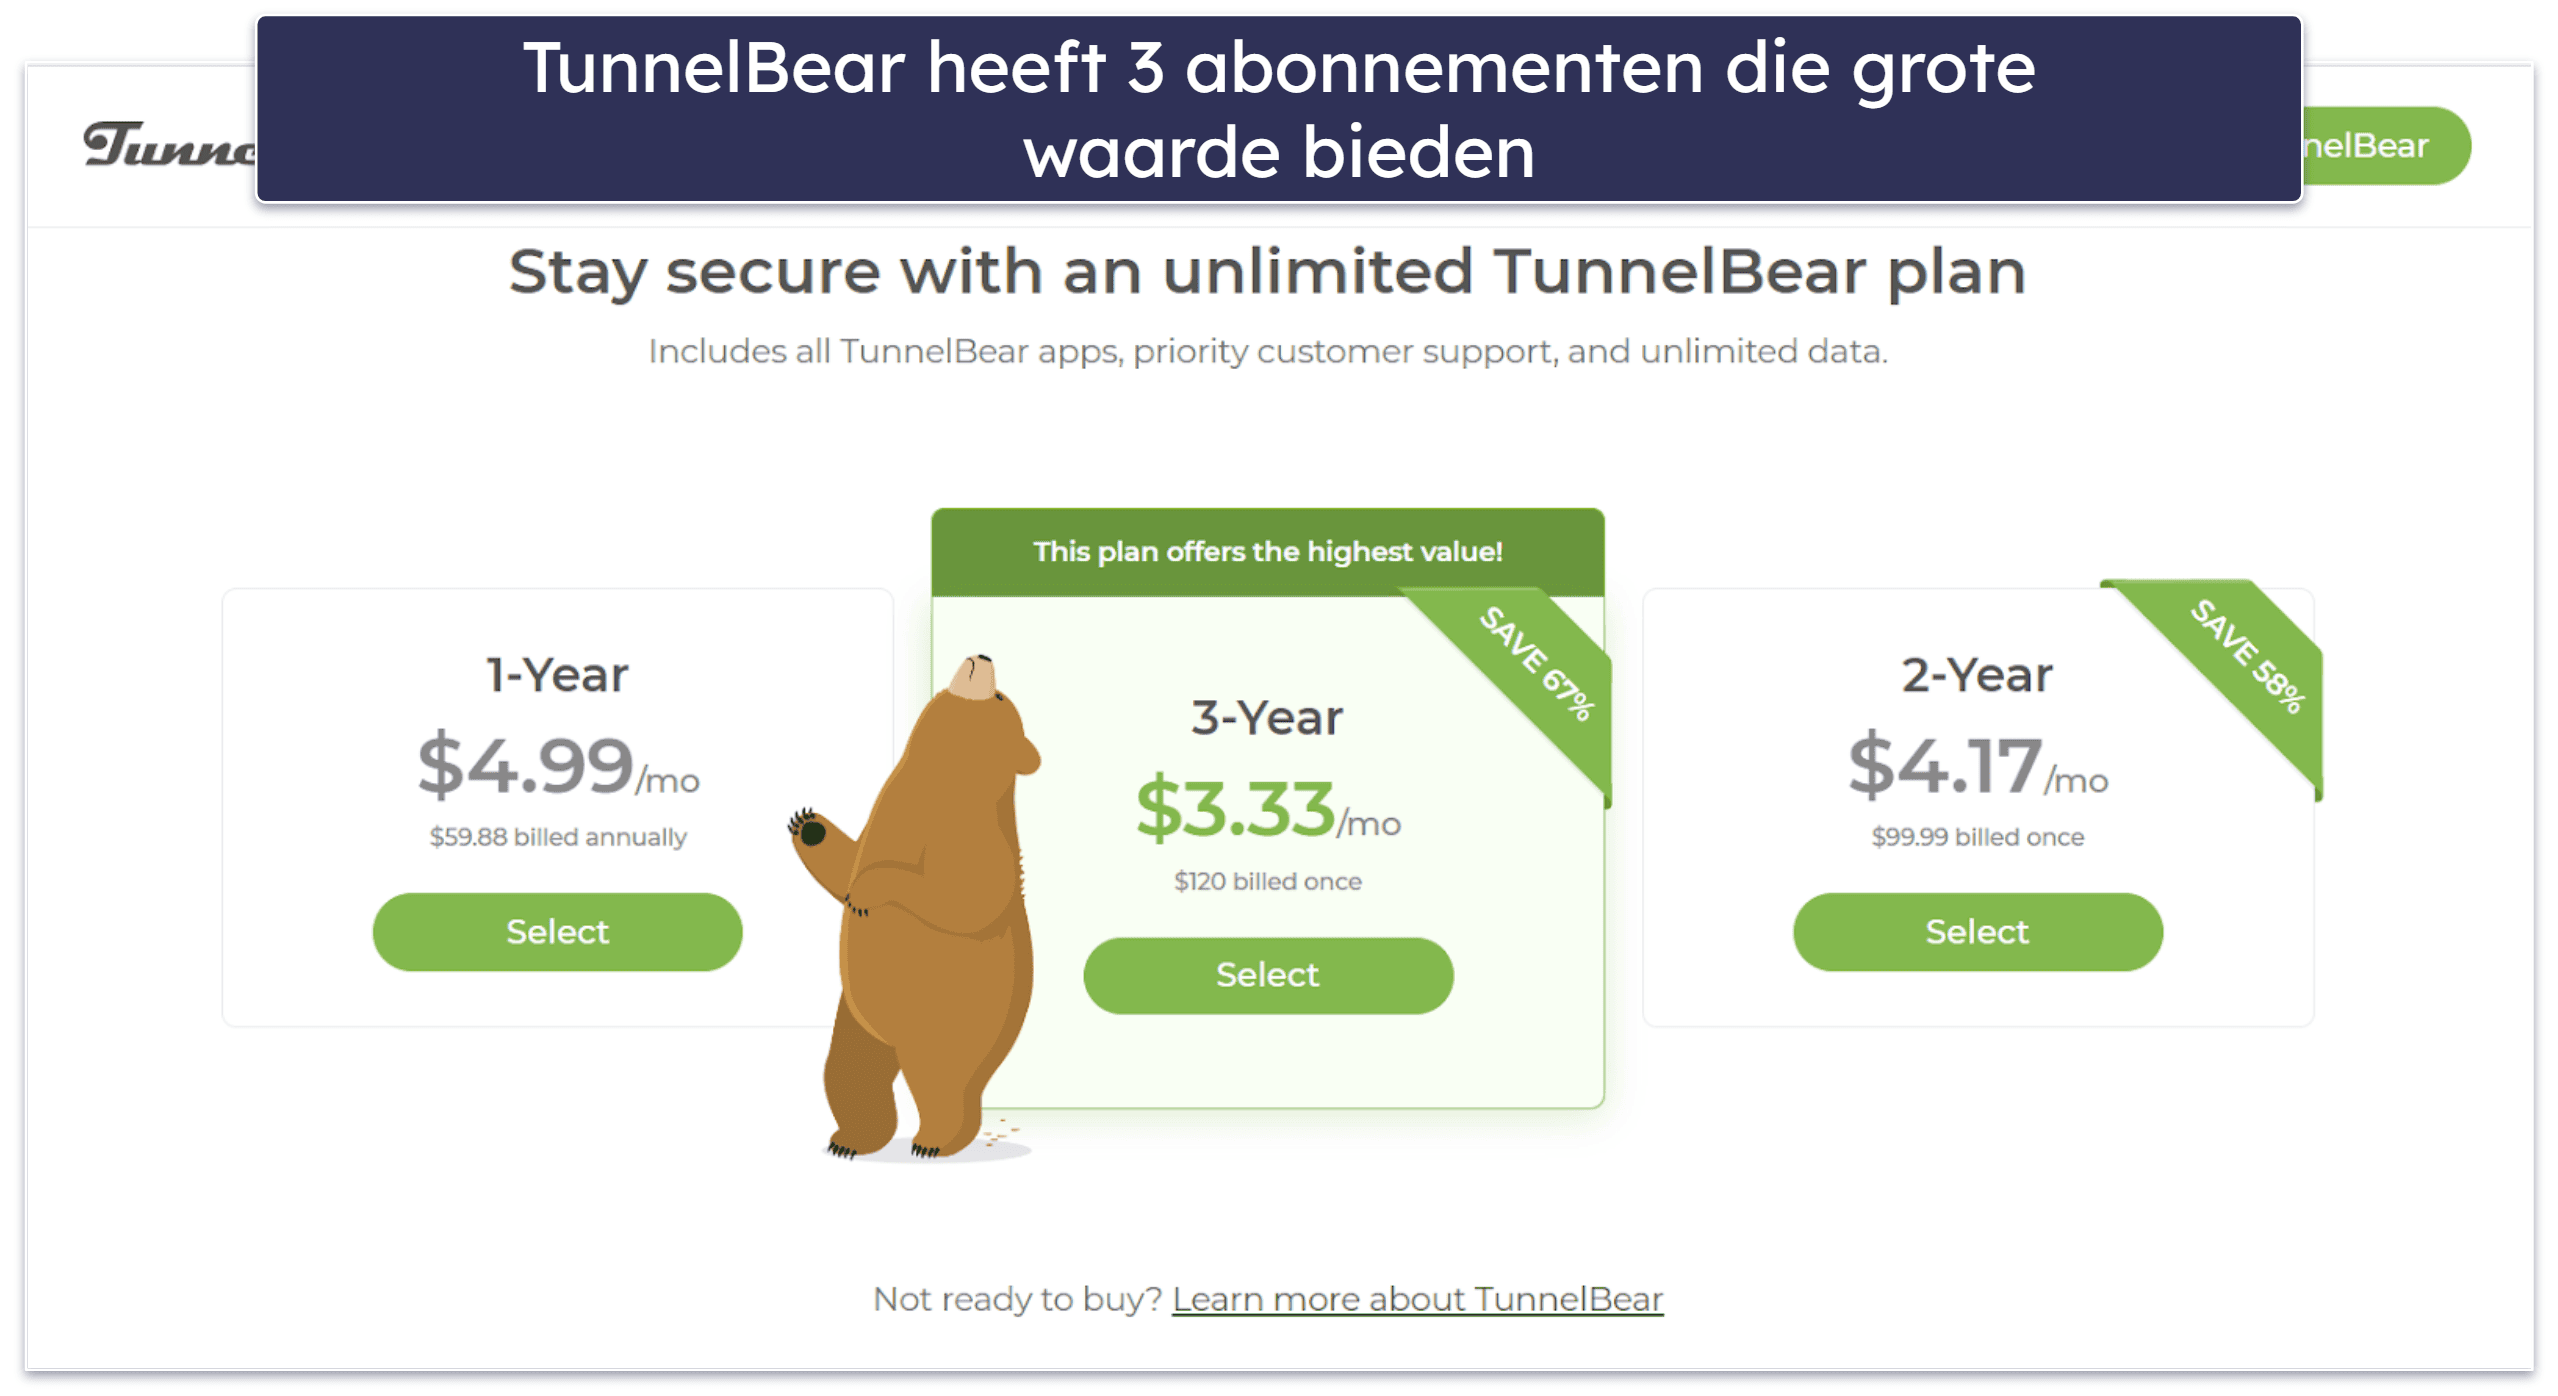 8. TunnelBear — Gebruiksvriendelijk en leuk om te gebruiken